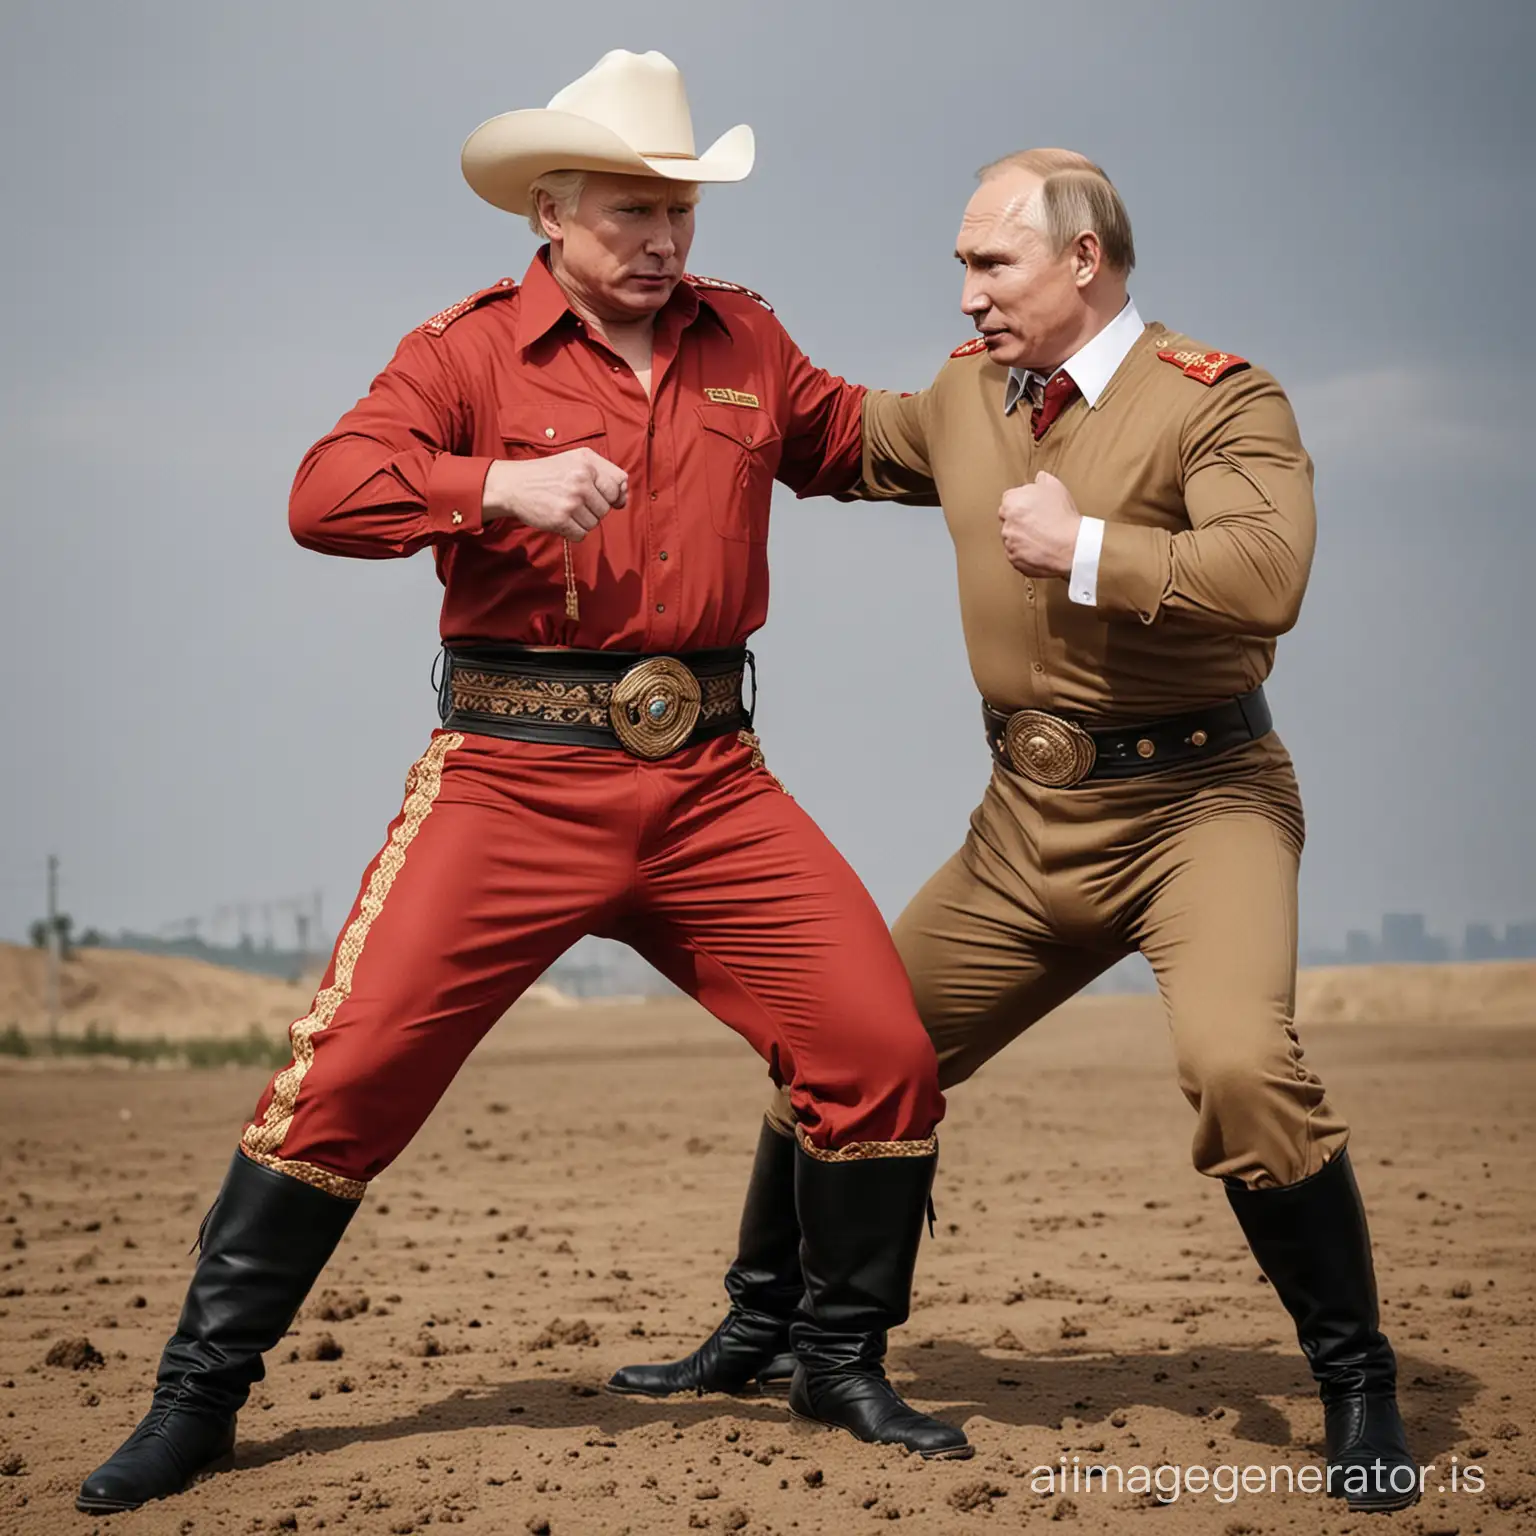 Putin in Soviet army costume wrestling Trump in cowboy costume